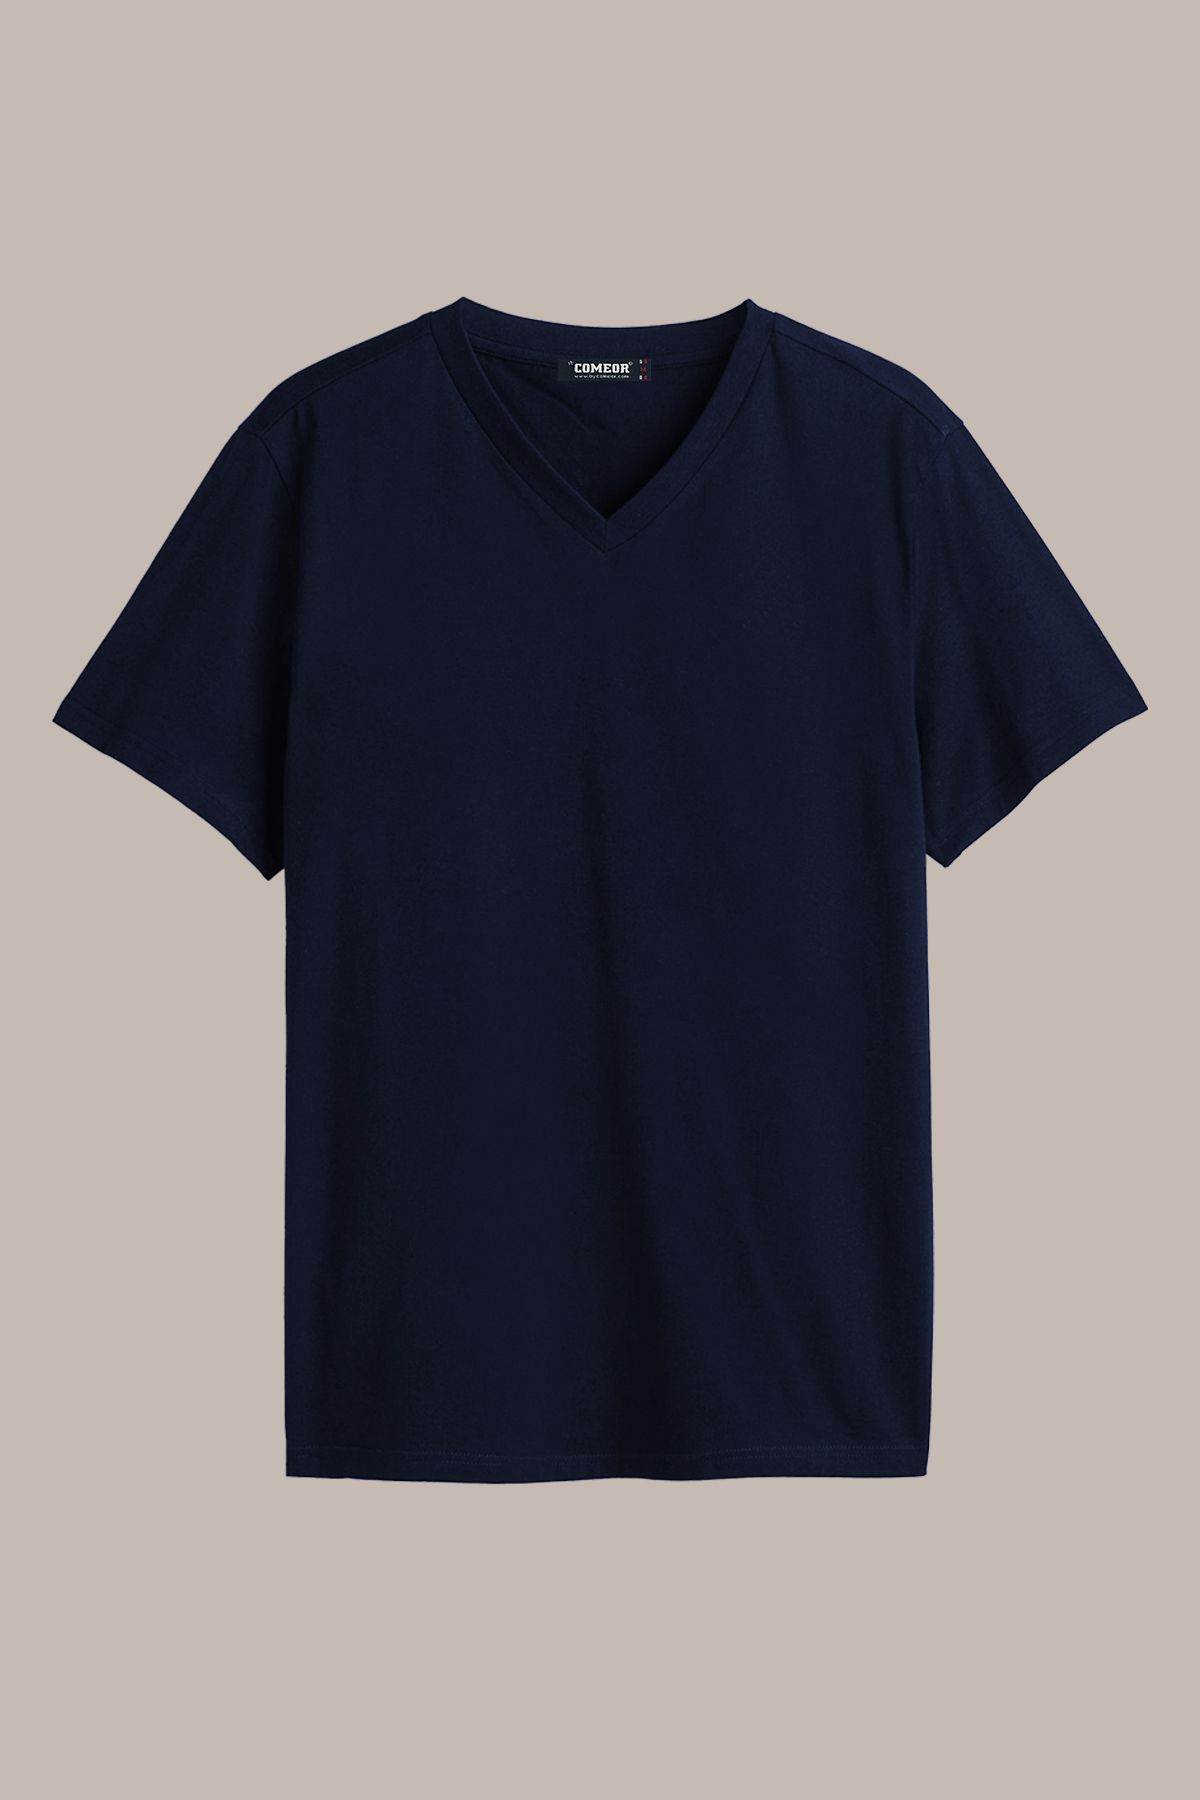 COMEOR Erkek Lacivert Basıc Regular Fit Pamuklu Kısa Kollu V Yaka T-shirt